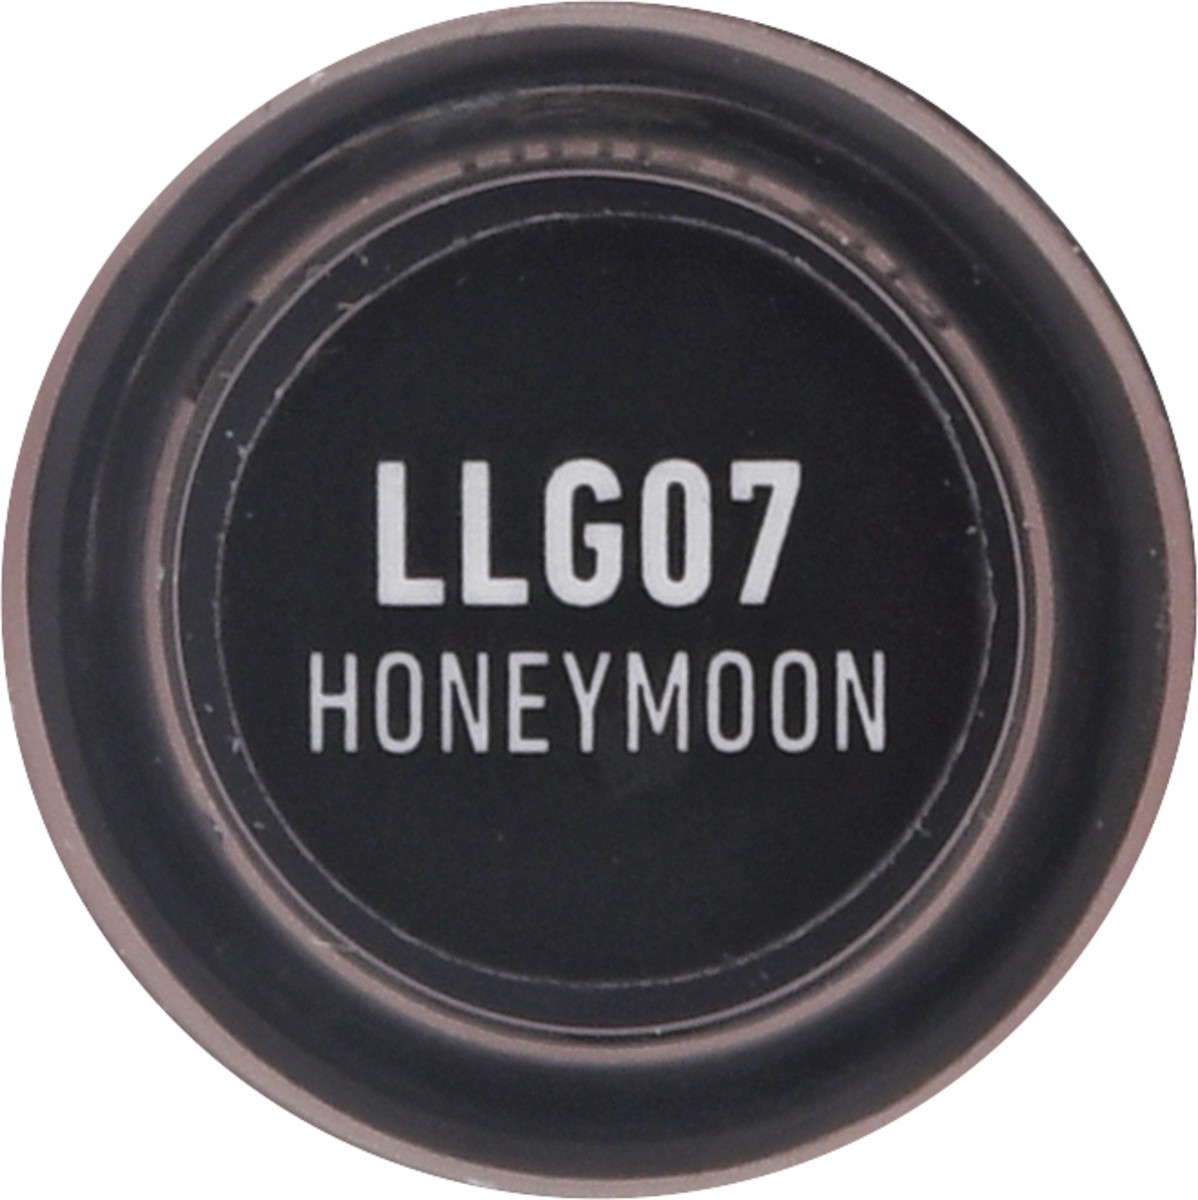 slide 8 of 11, NYX Professional Makeup Honeymoon LLG07 Lip Gloss 0.11 oz, 0.11 fl oz